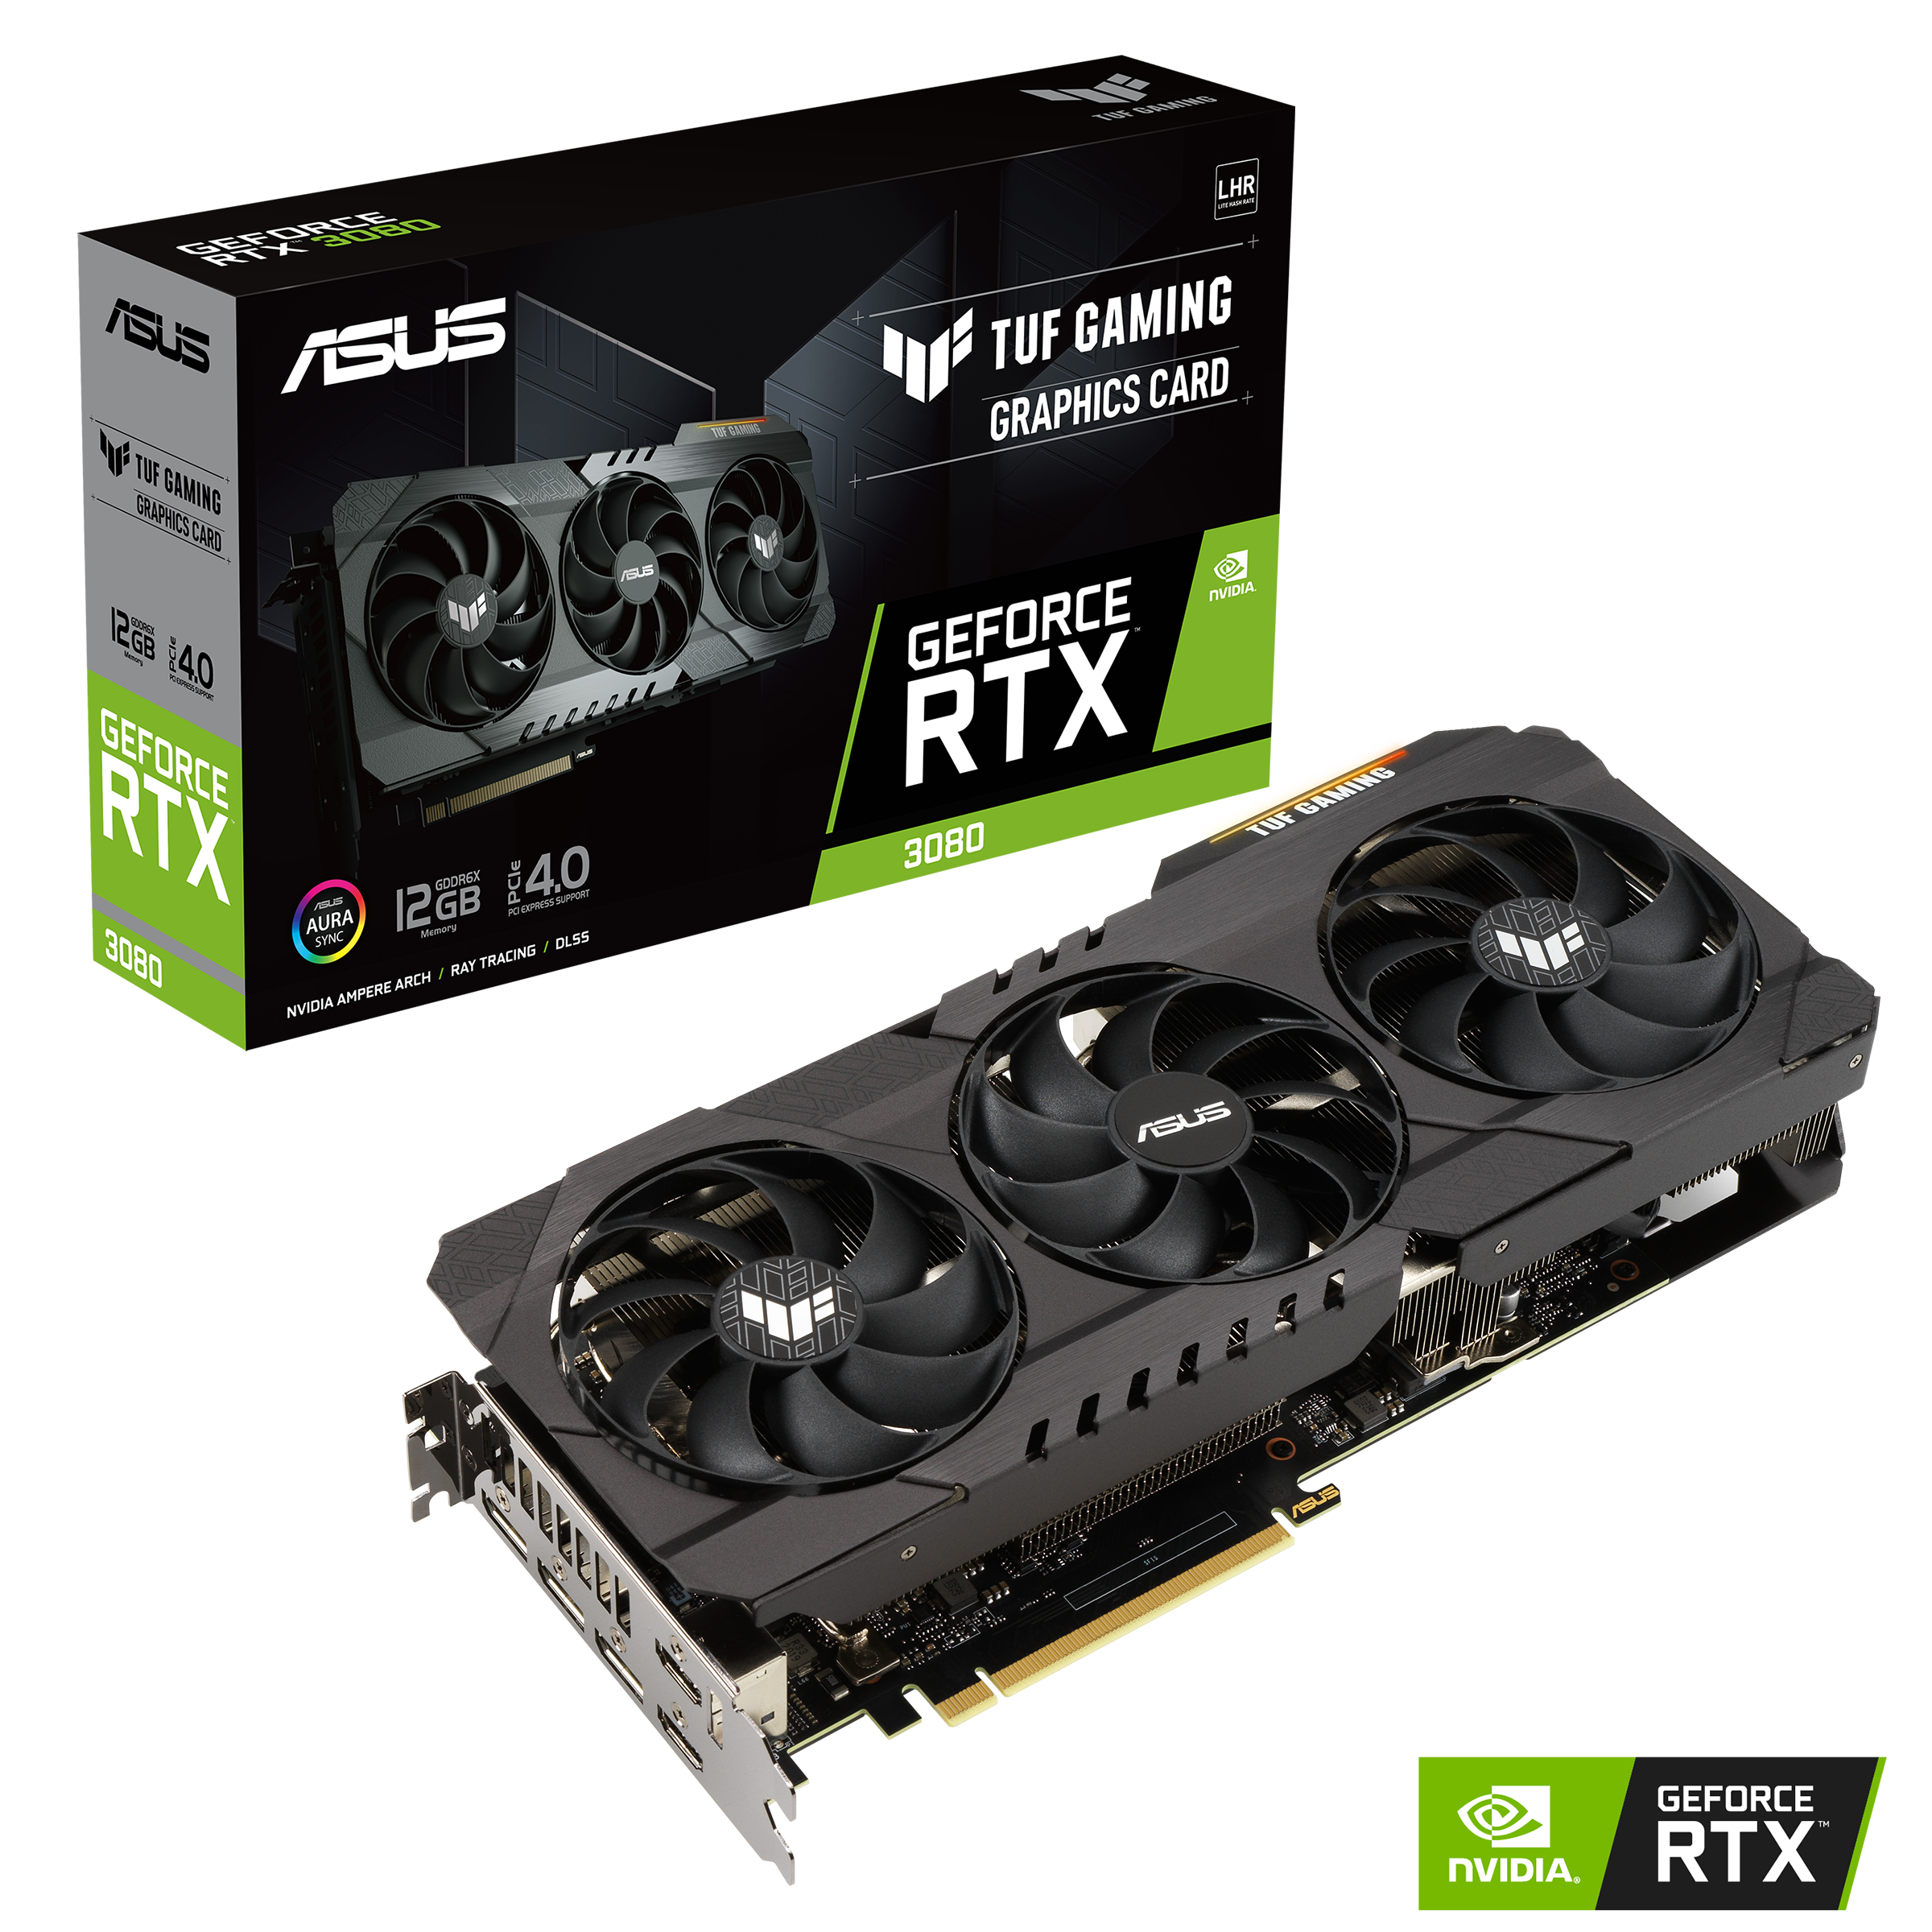 新品未開封　ASUS GeForce GTX1660 super